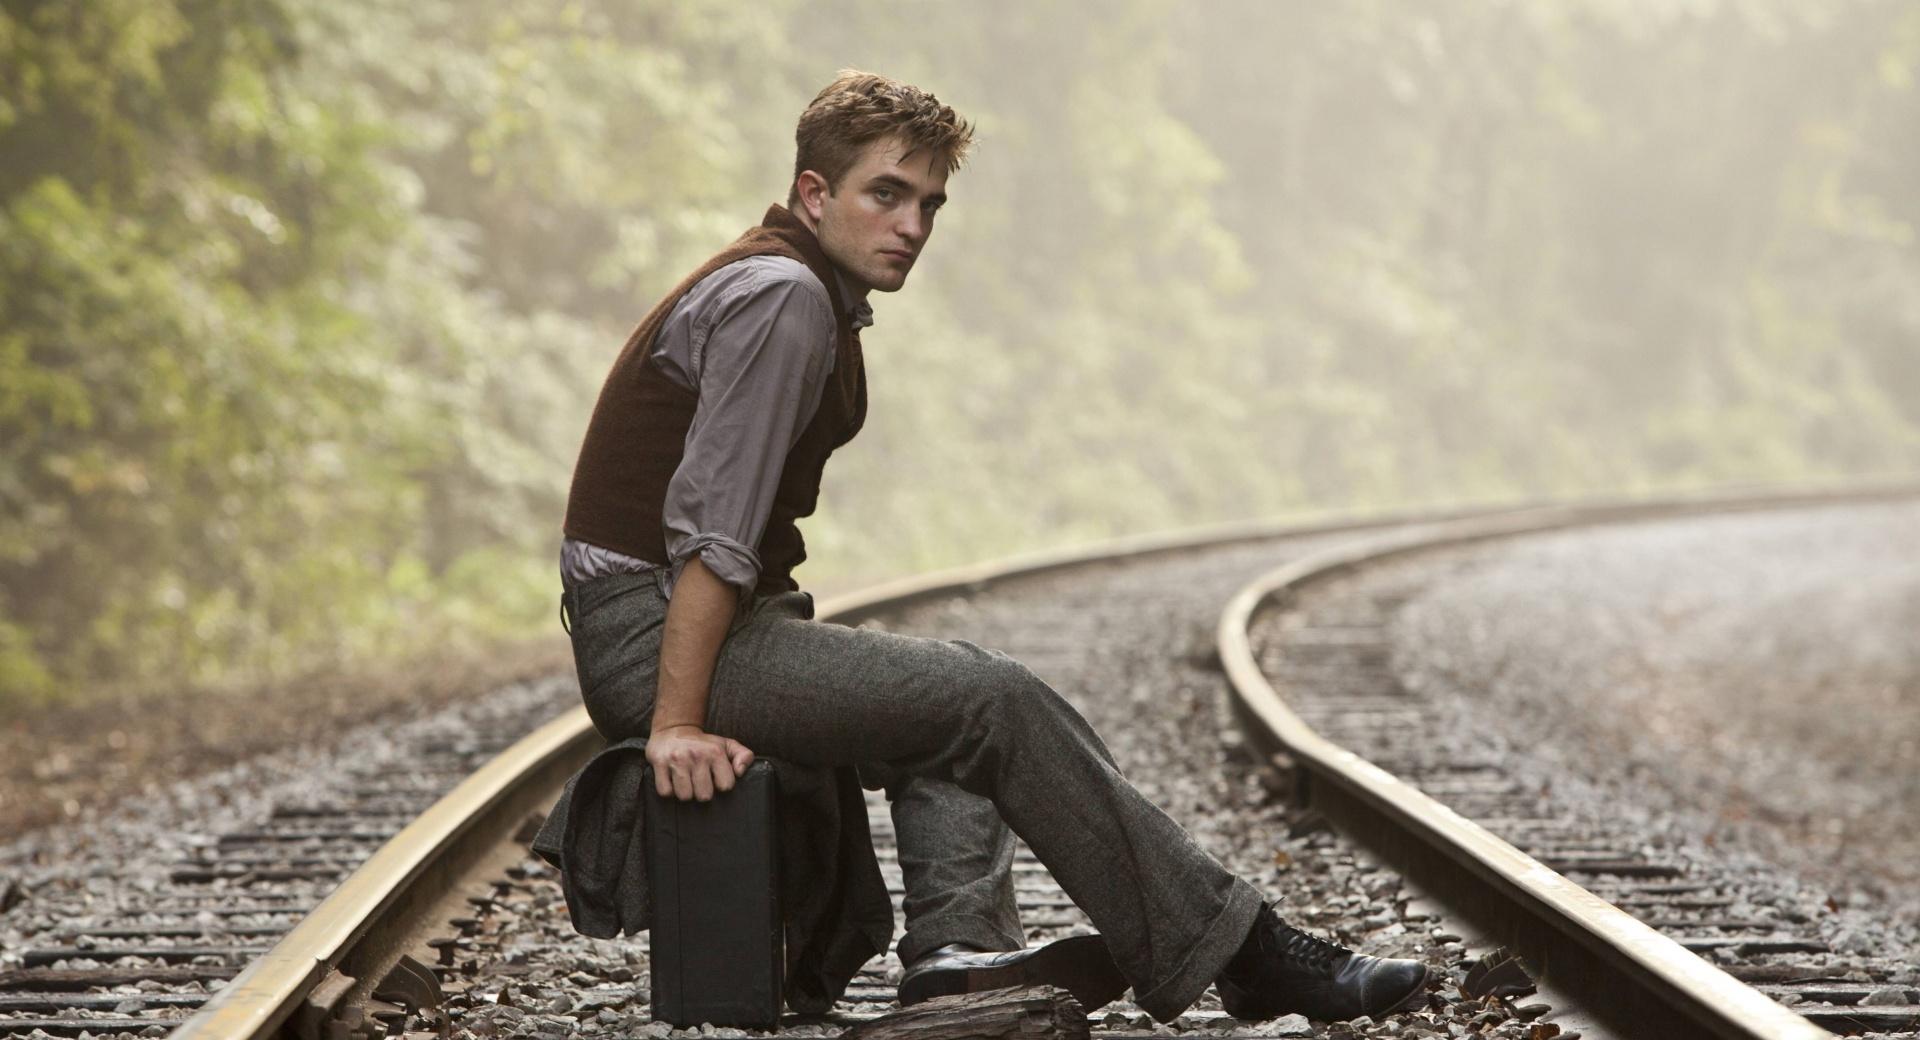 Robert Pattinson On Rail Track at 2048 x 2048 iPad size wallpapers HD quality